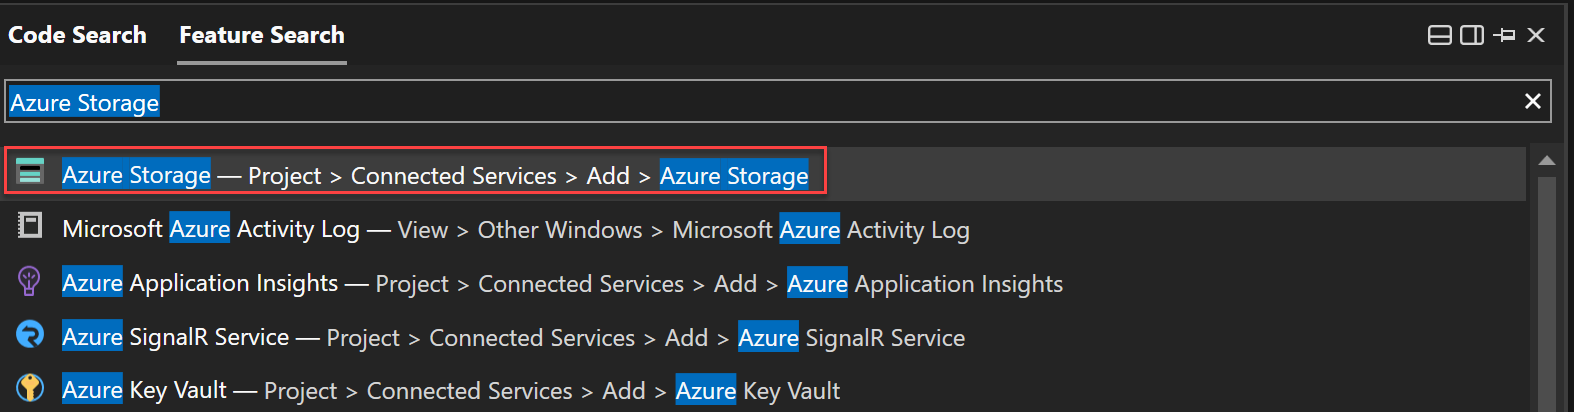 Снимок экрана: поиск функций для поиска служба хранилища Azure.